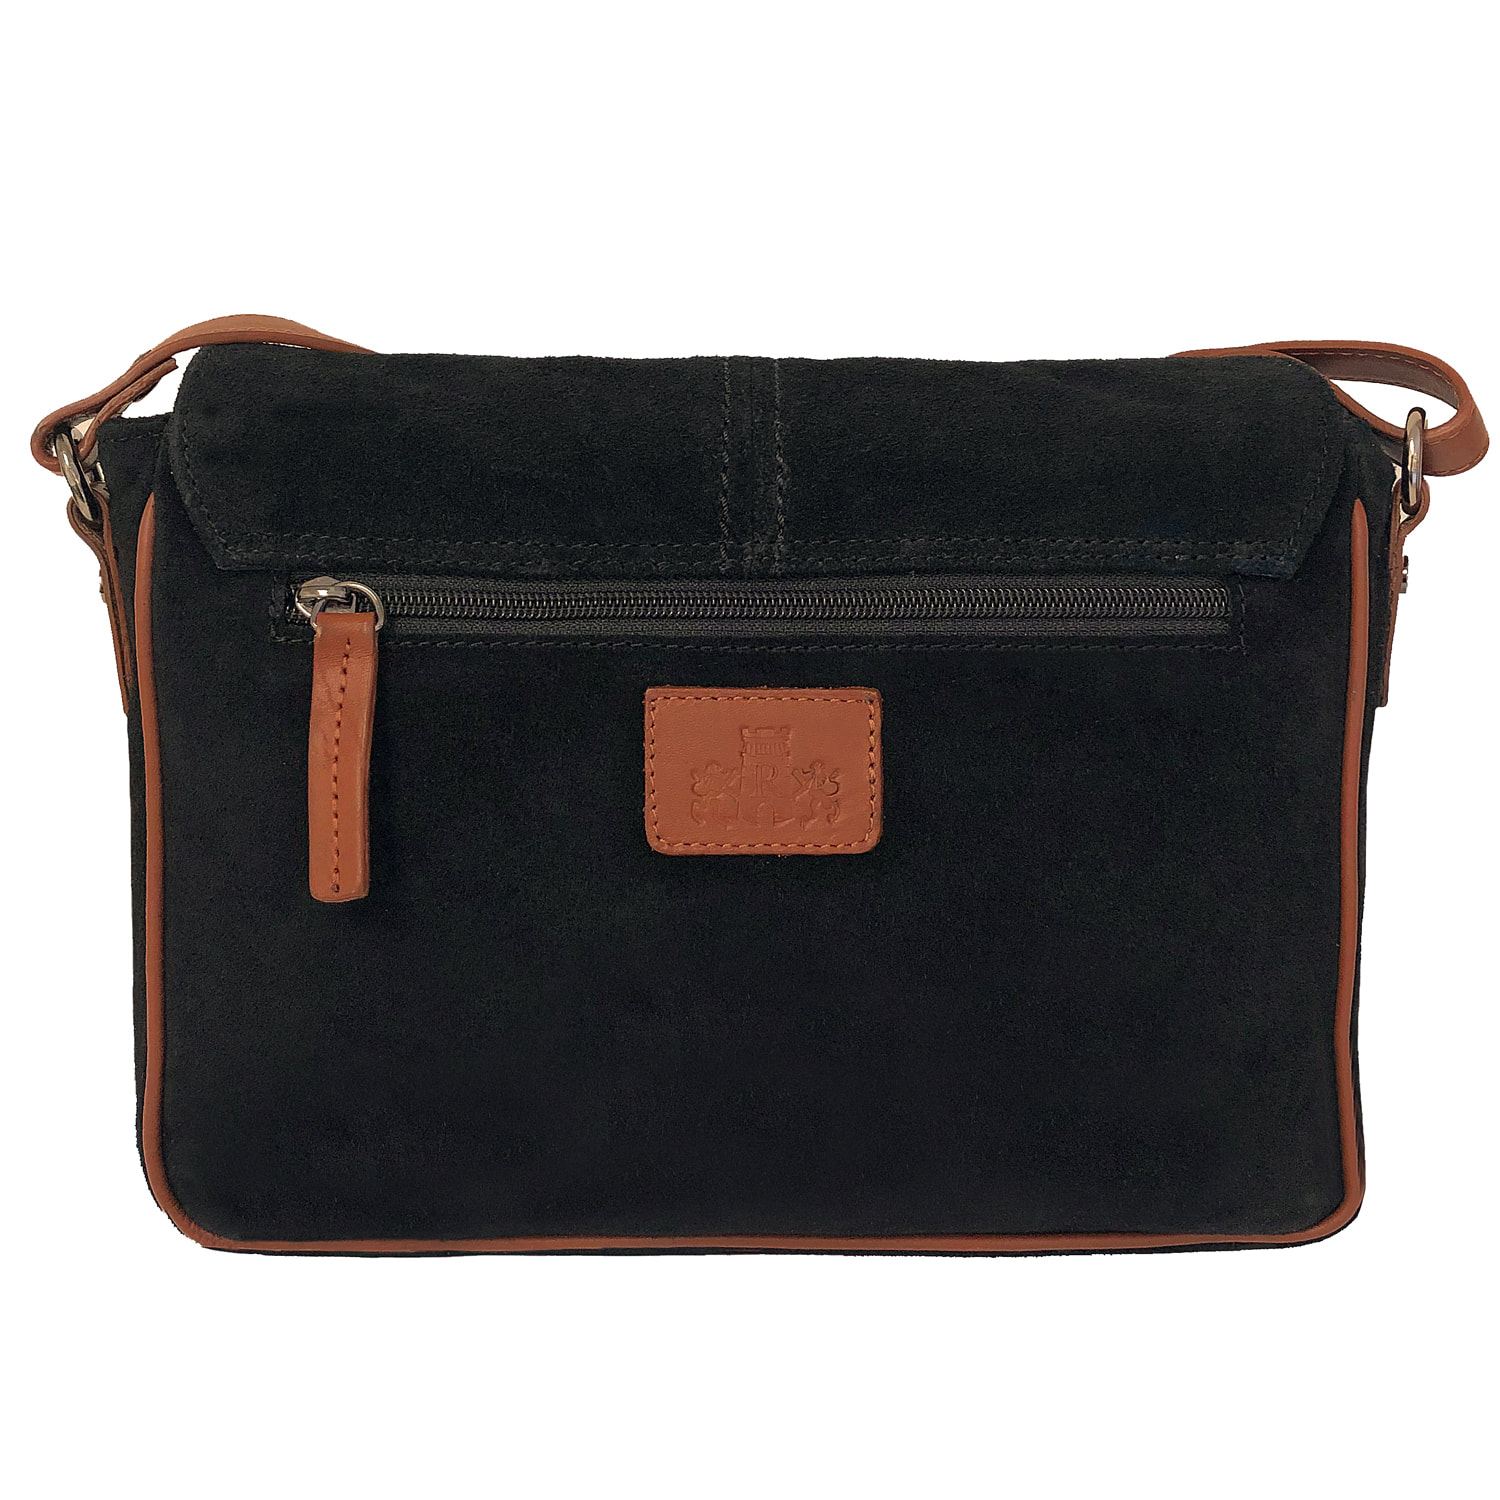 Rowallan Black Suede and Tan Leather Shoulder Bag